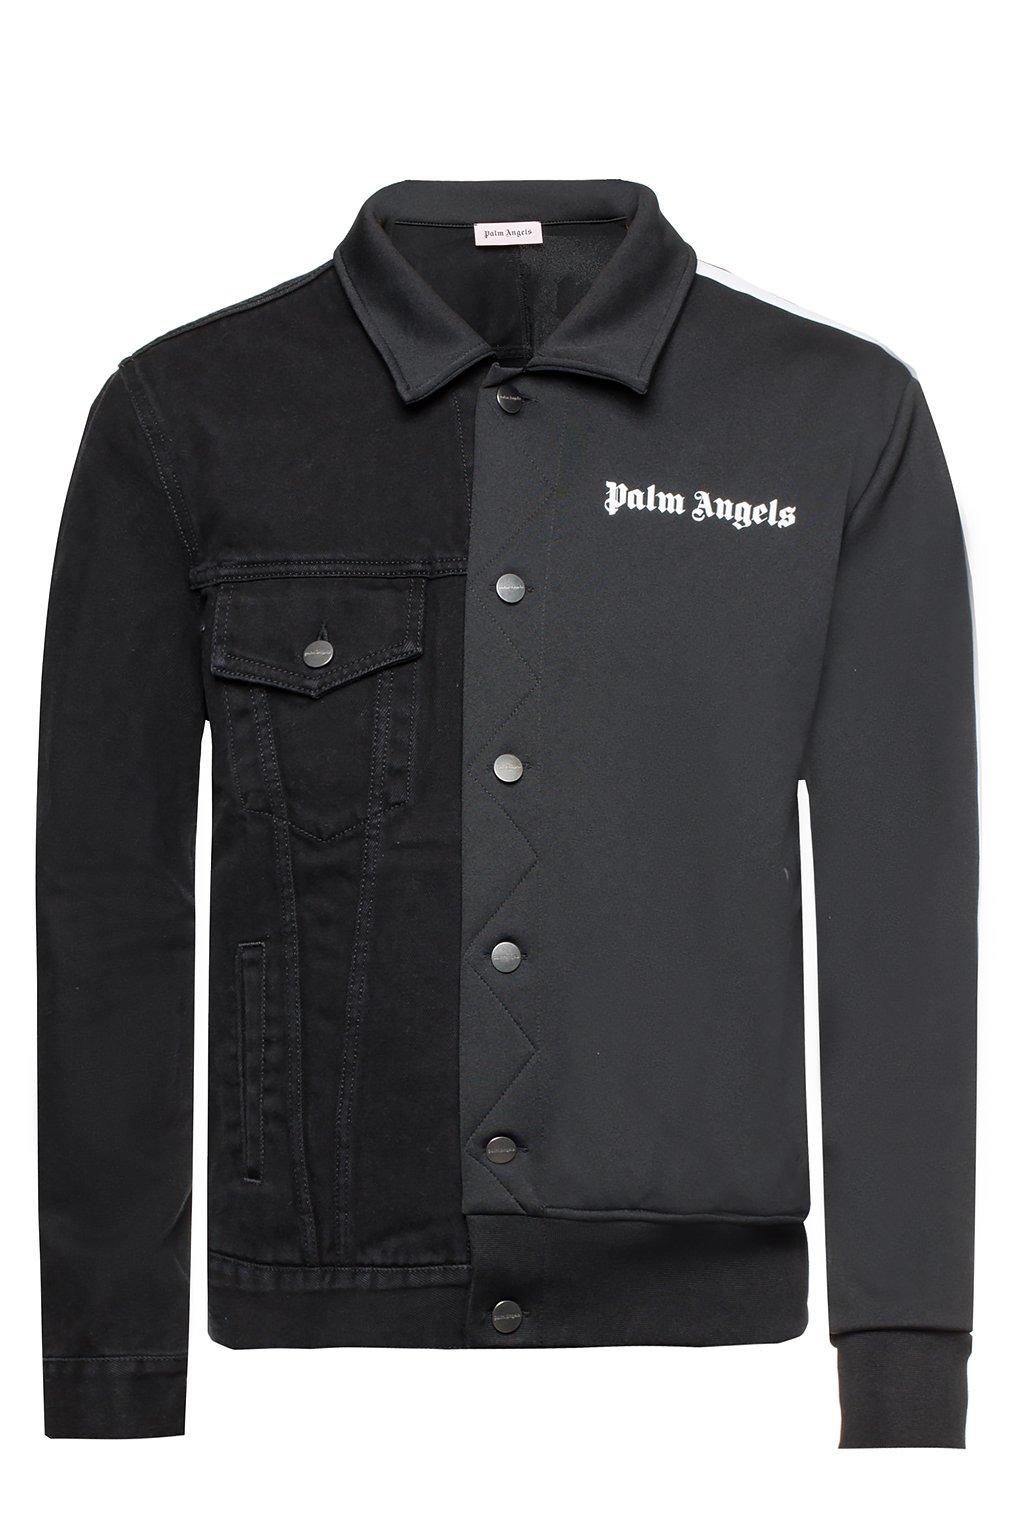 Palm Angels Denim Jacket With Sweatshirt Effect in Black for Men - Lyst